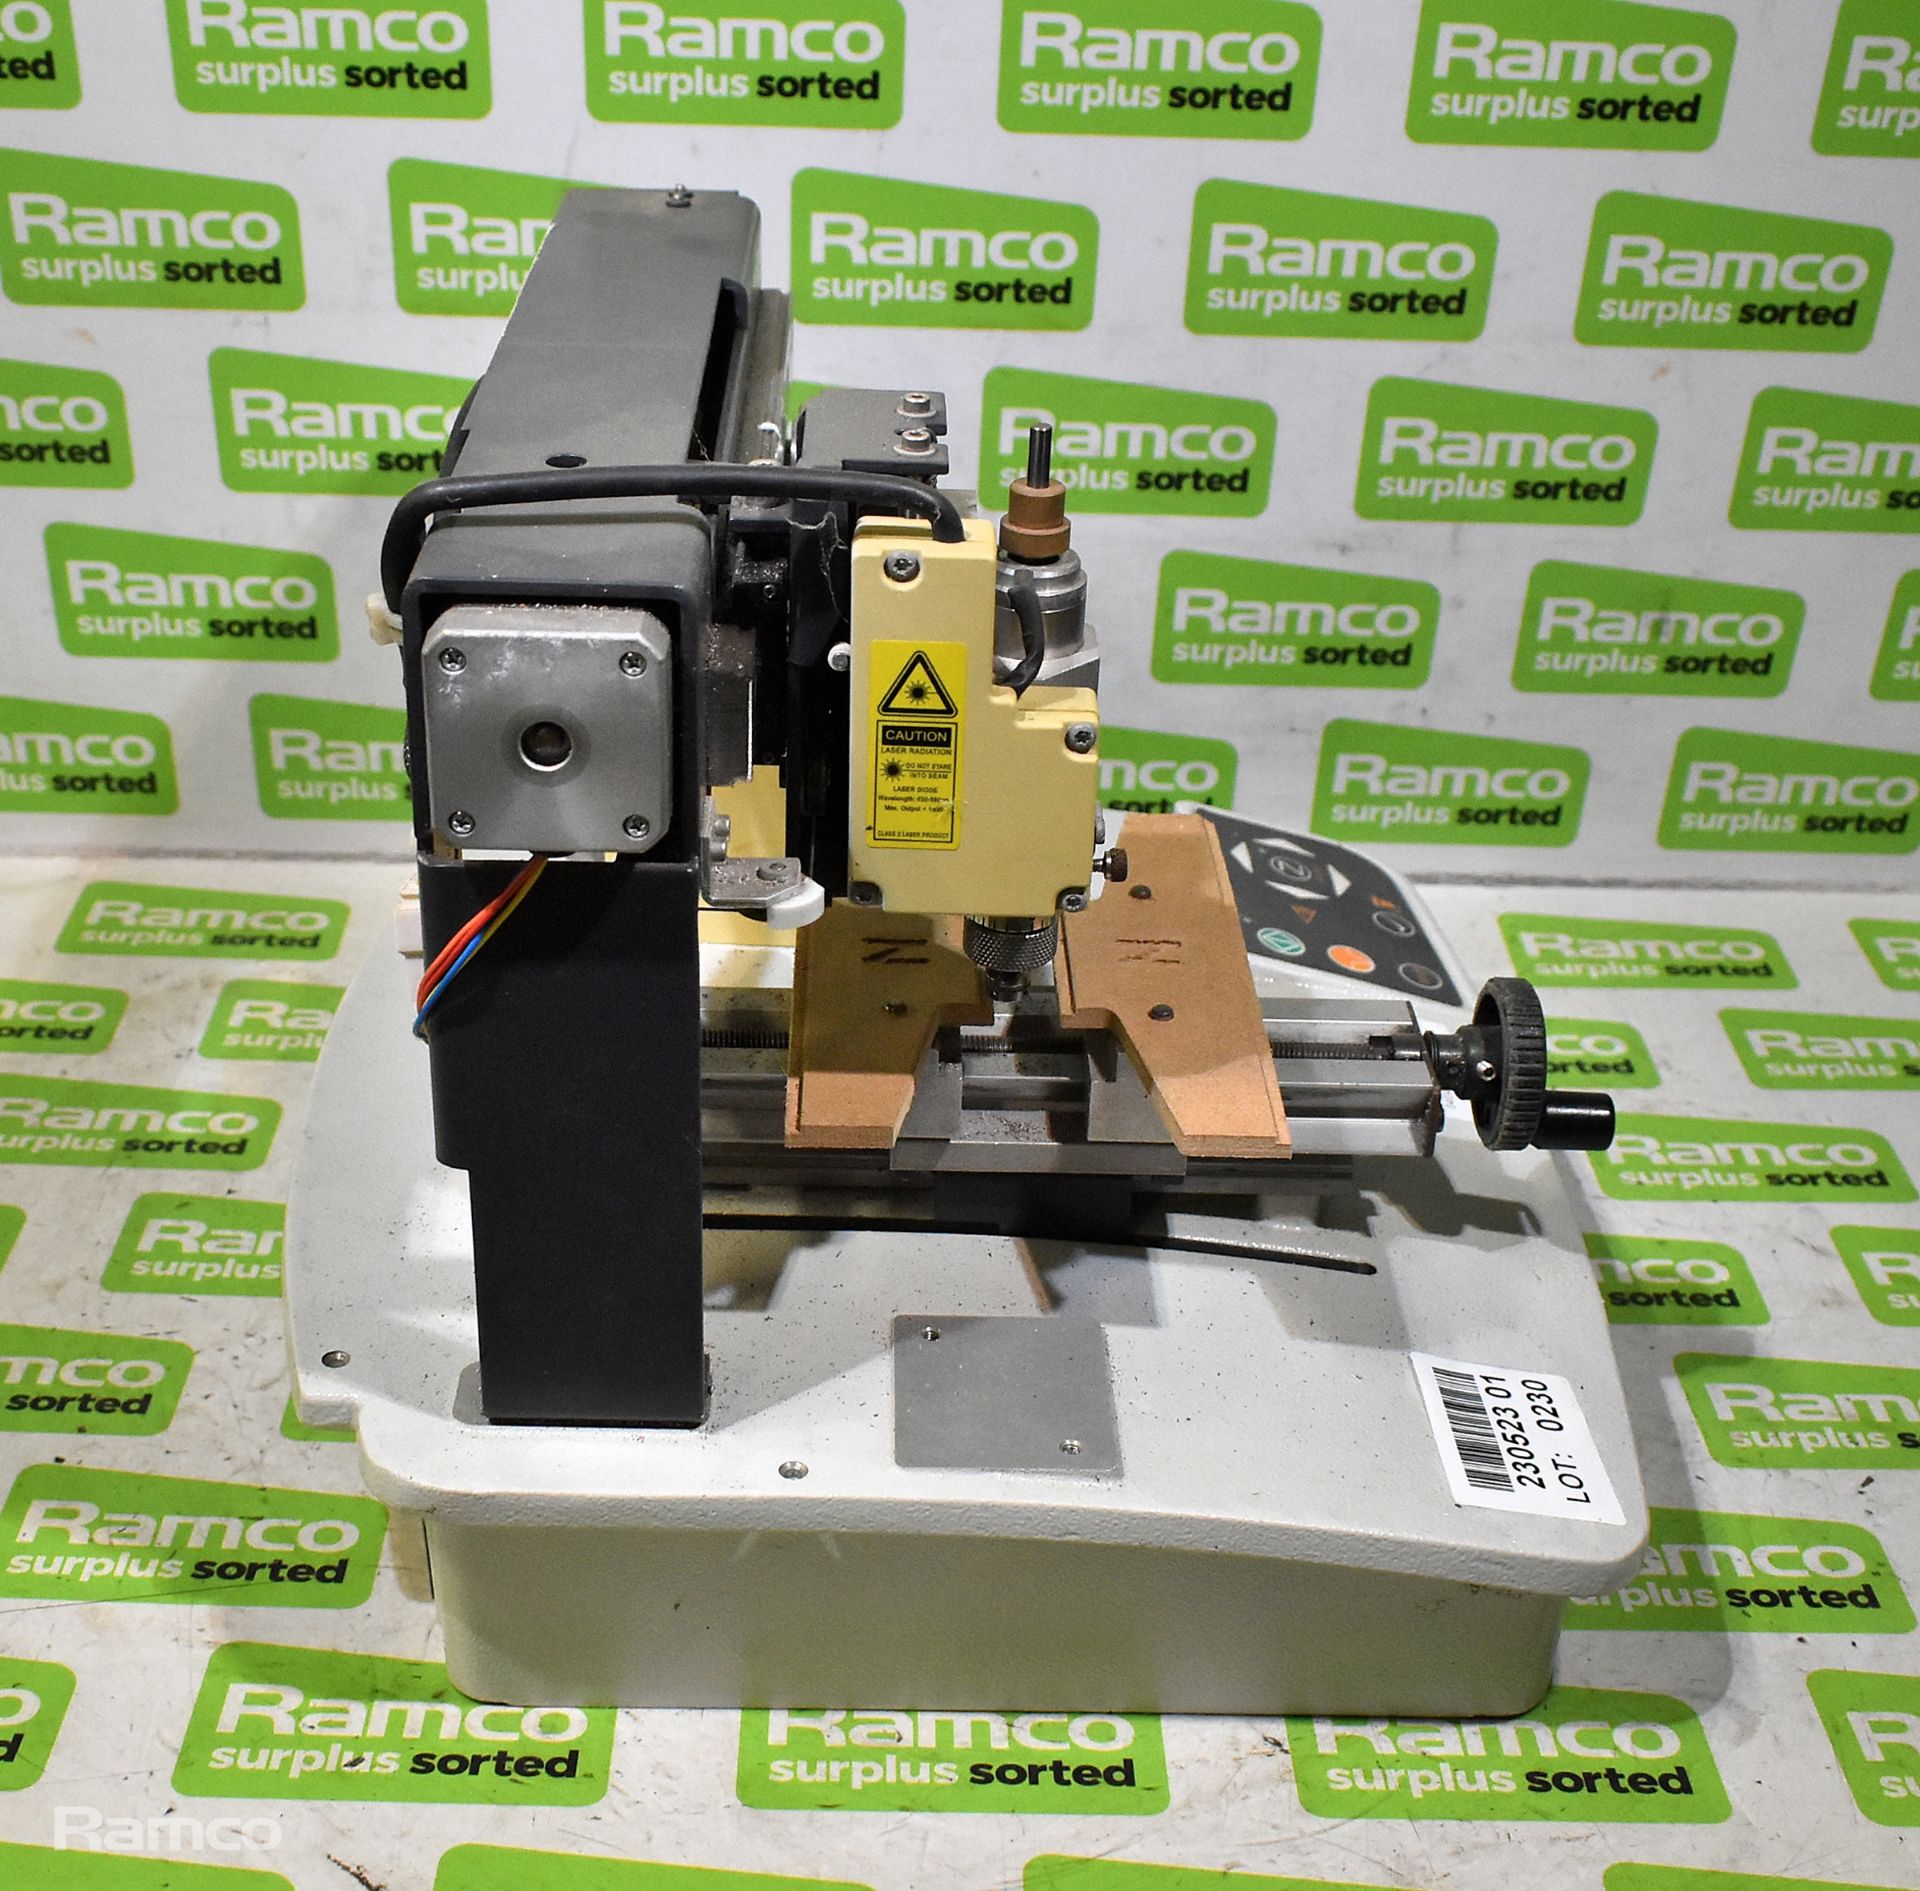 Gravograph M20 desktop engraving machine - Serial No. 92122-12 - MISSING OUTER CASING - Image 5 of 7